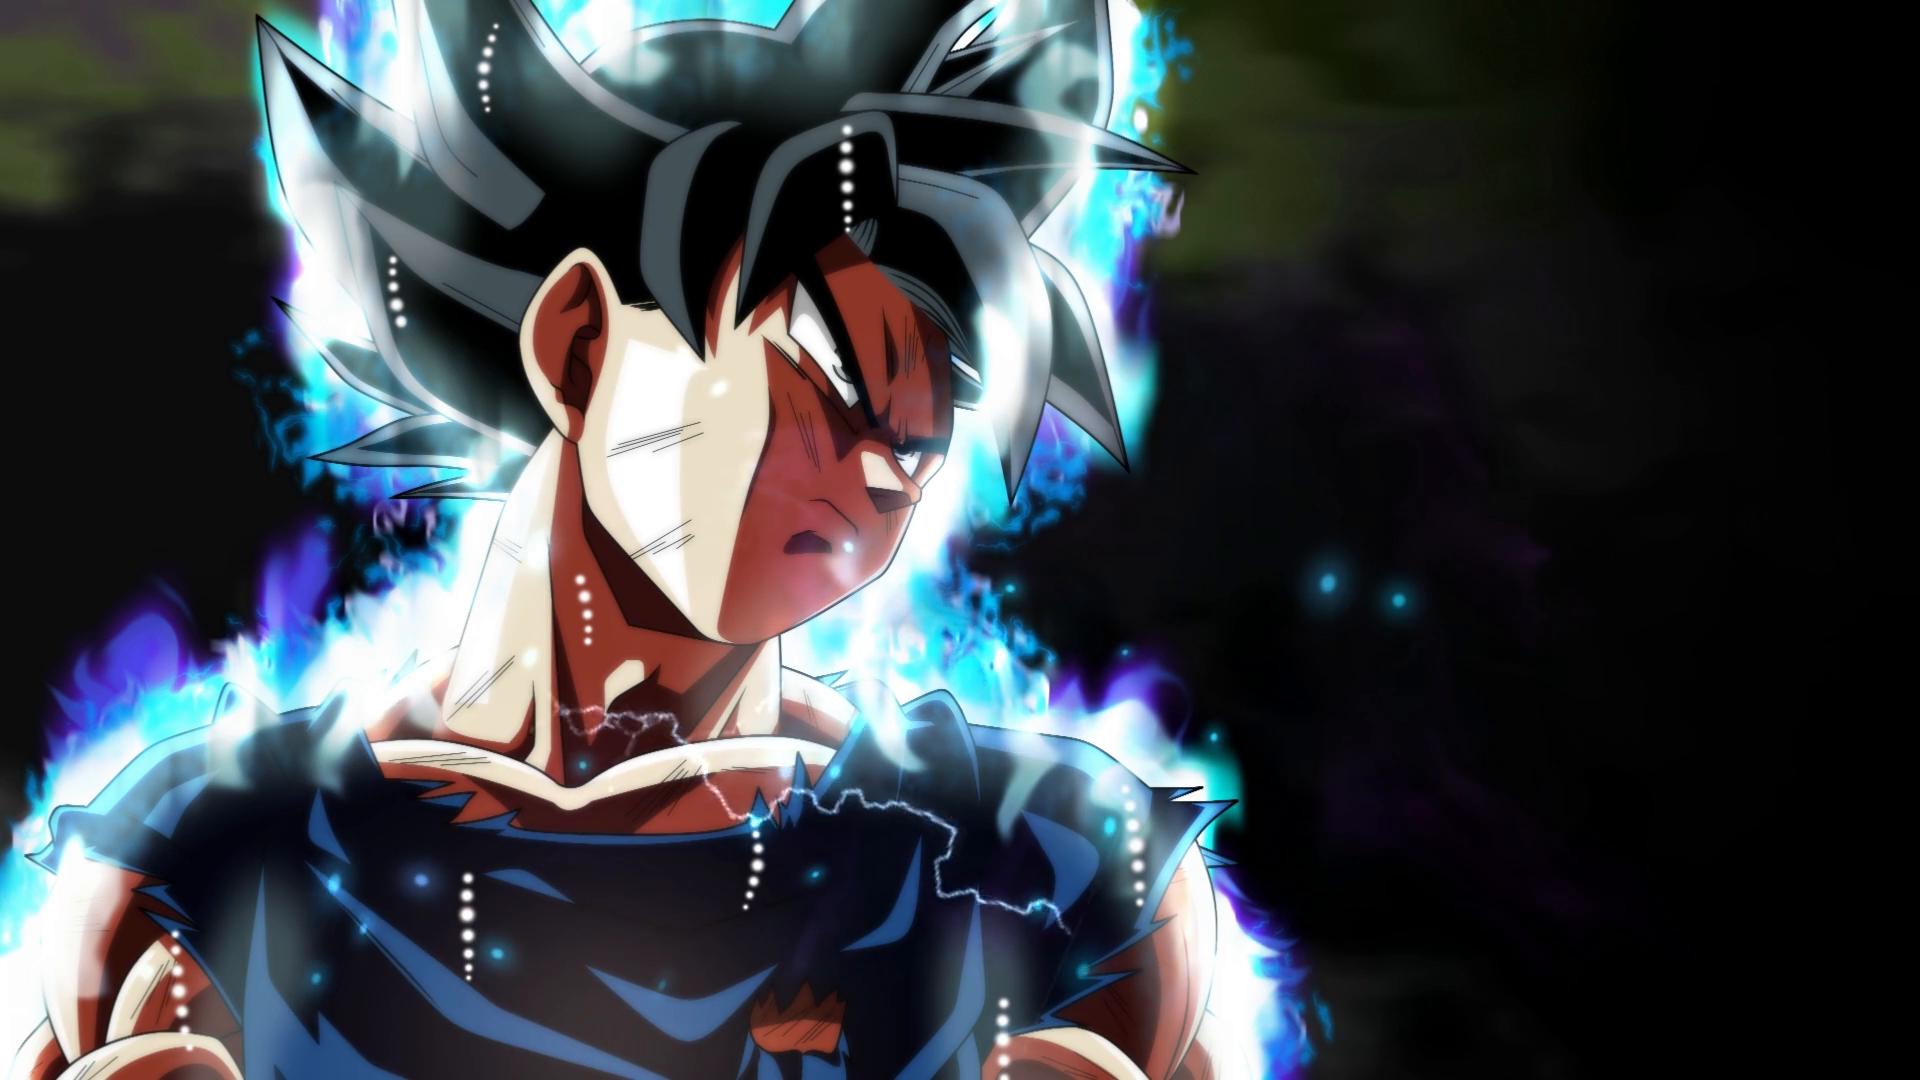 Goku Ultra instinct Wallpapers  Top 25 Best Goku Ultra instinct Backgrounds